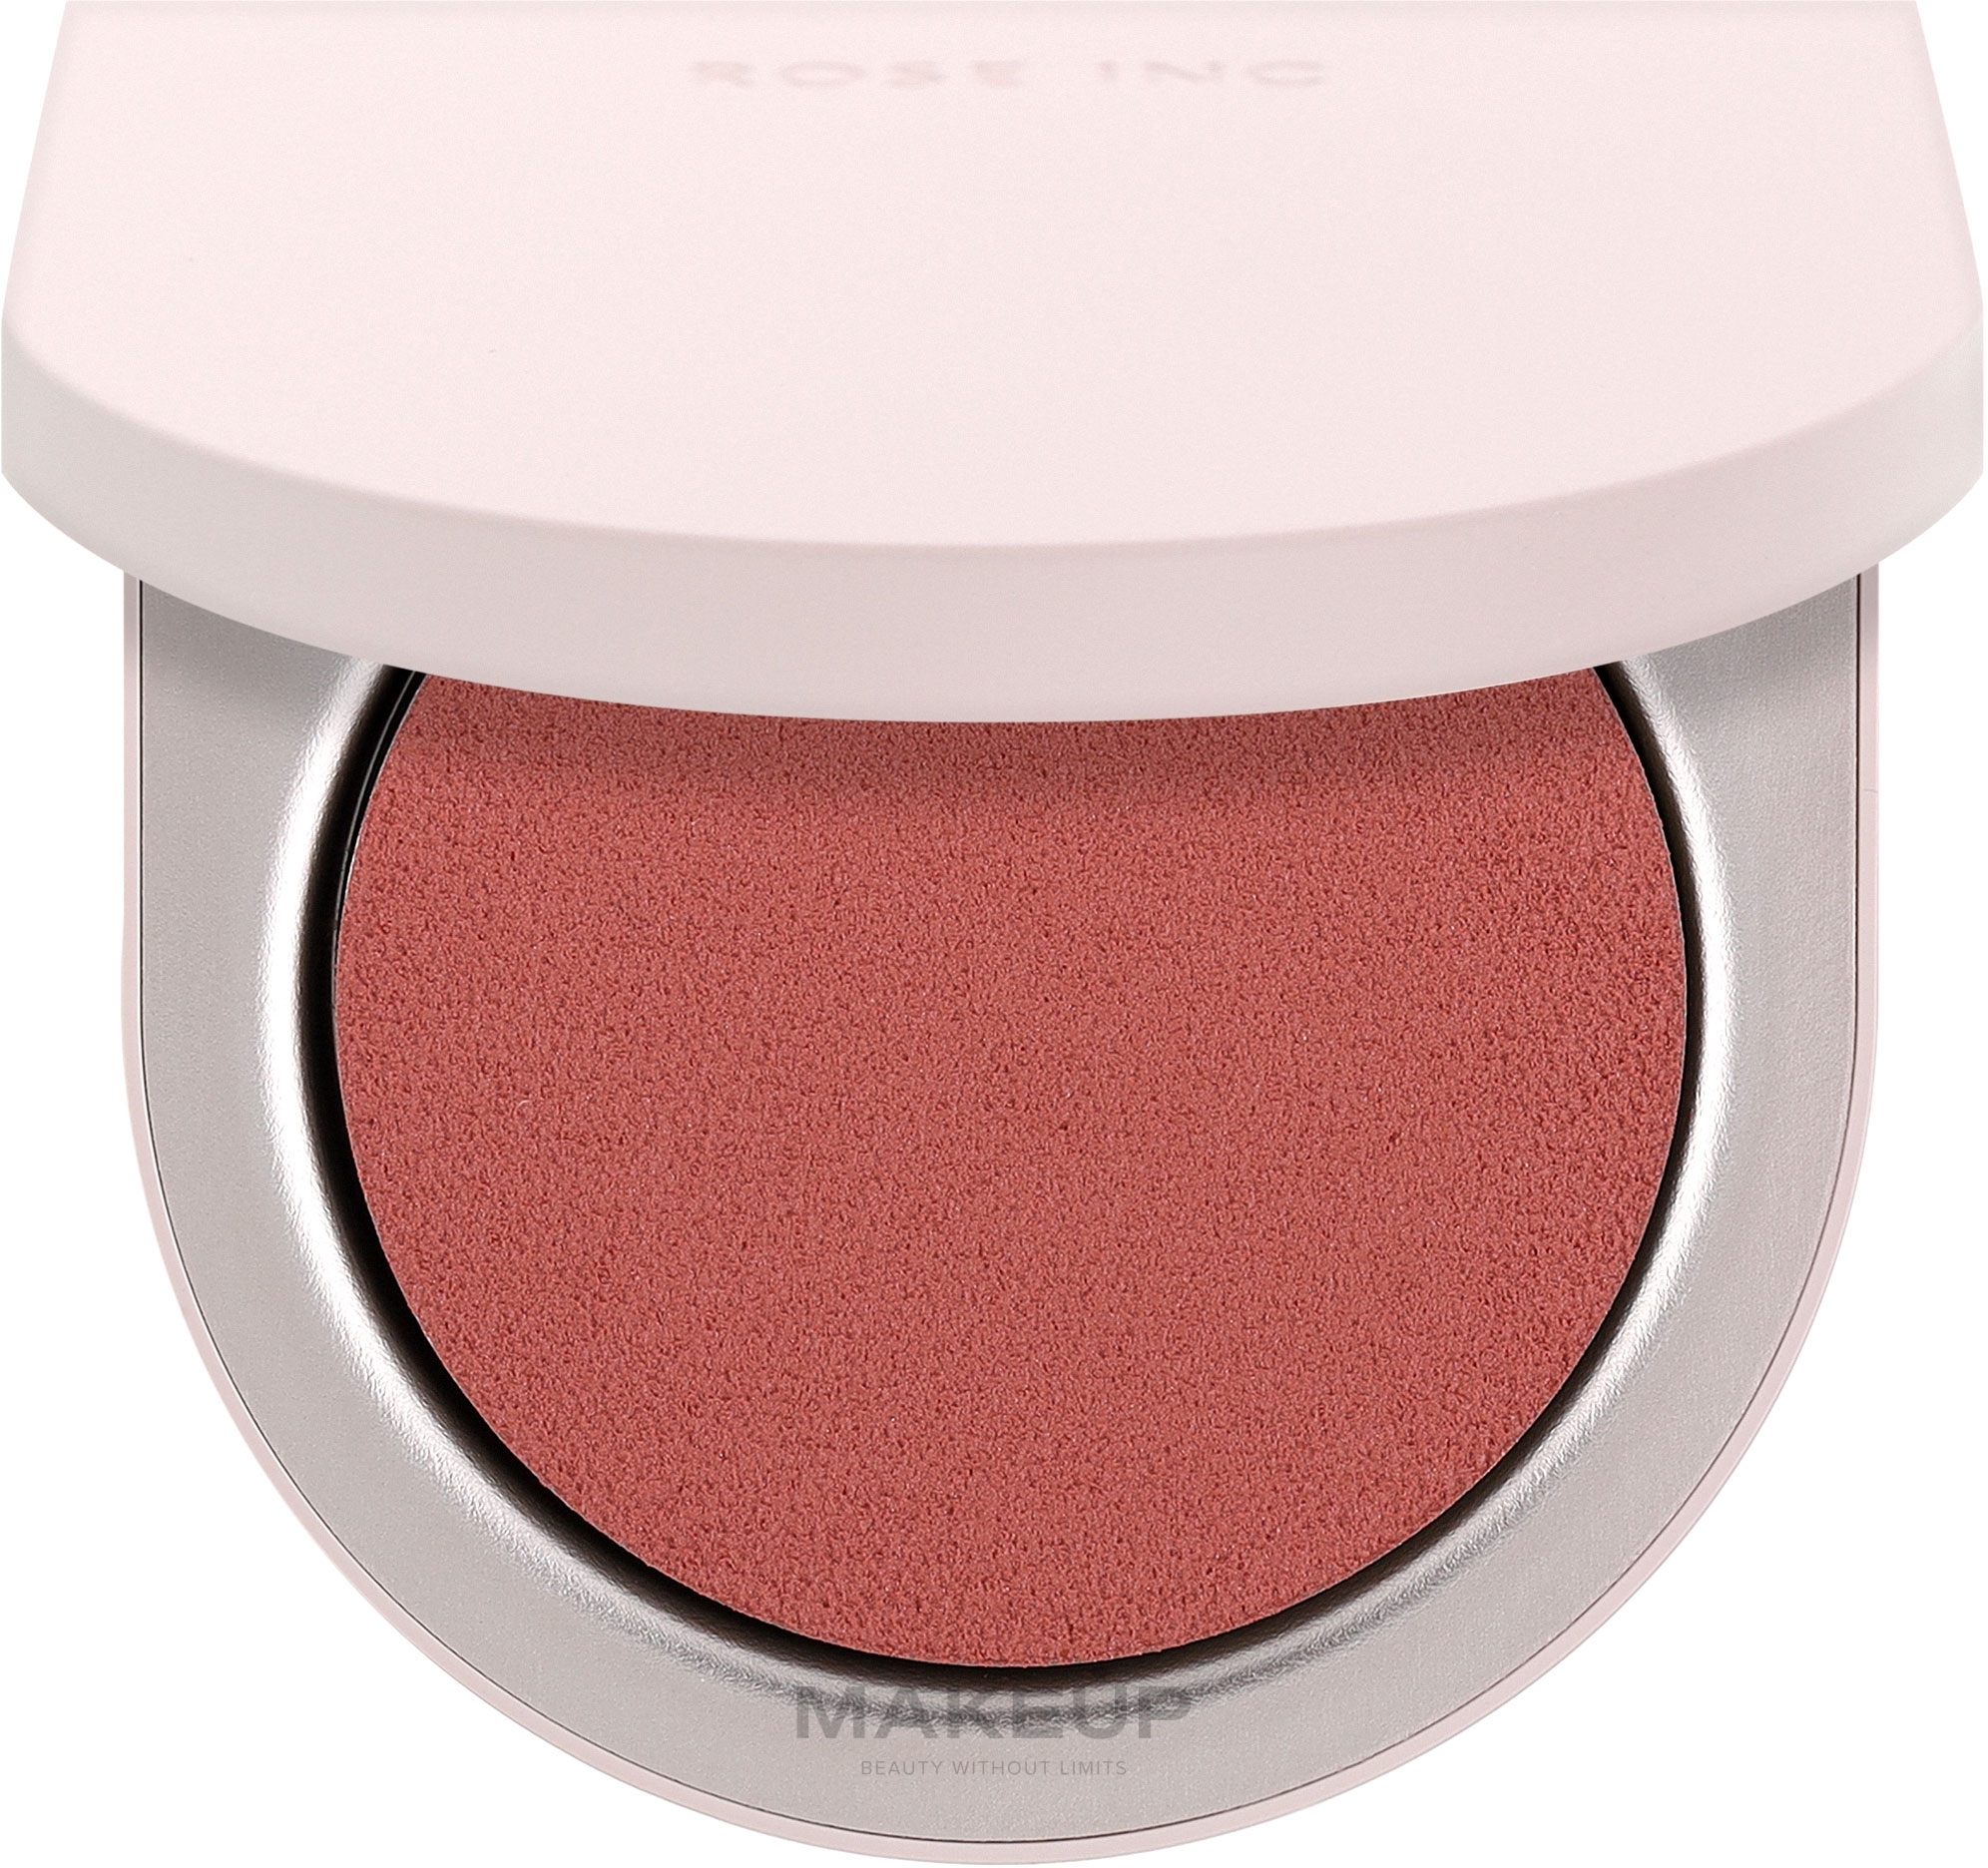 Rose Inc Cream Blush Cheek & Lip Color